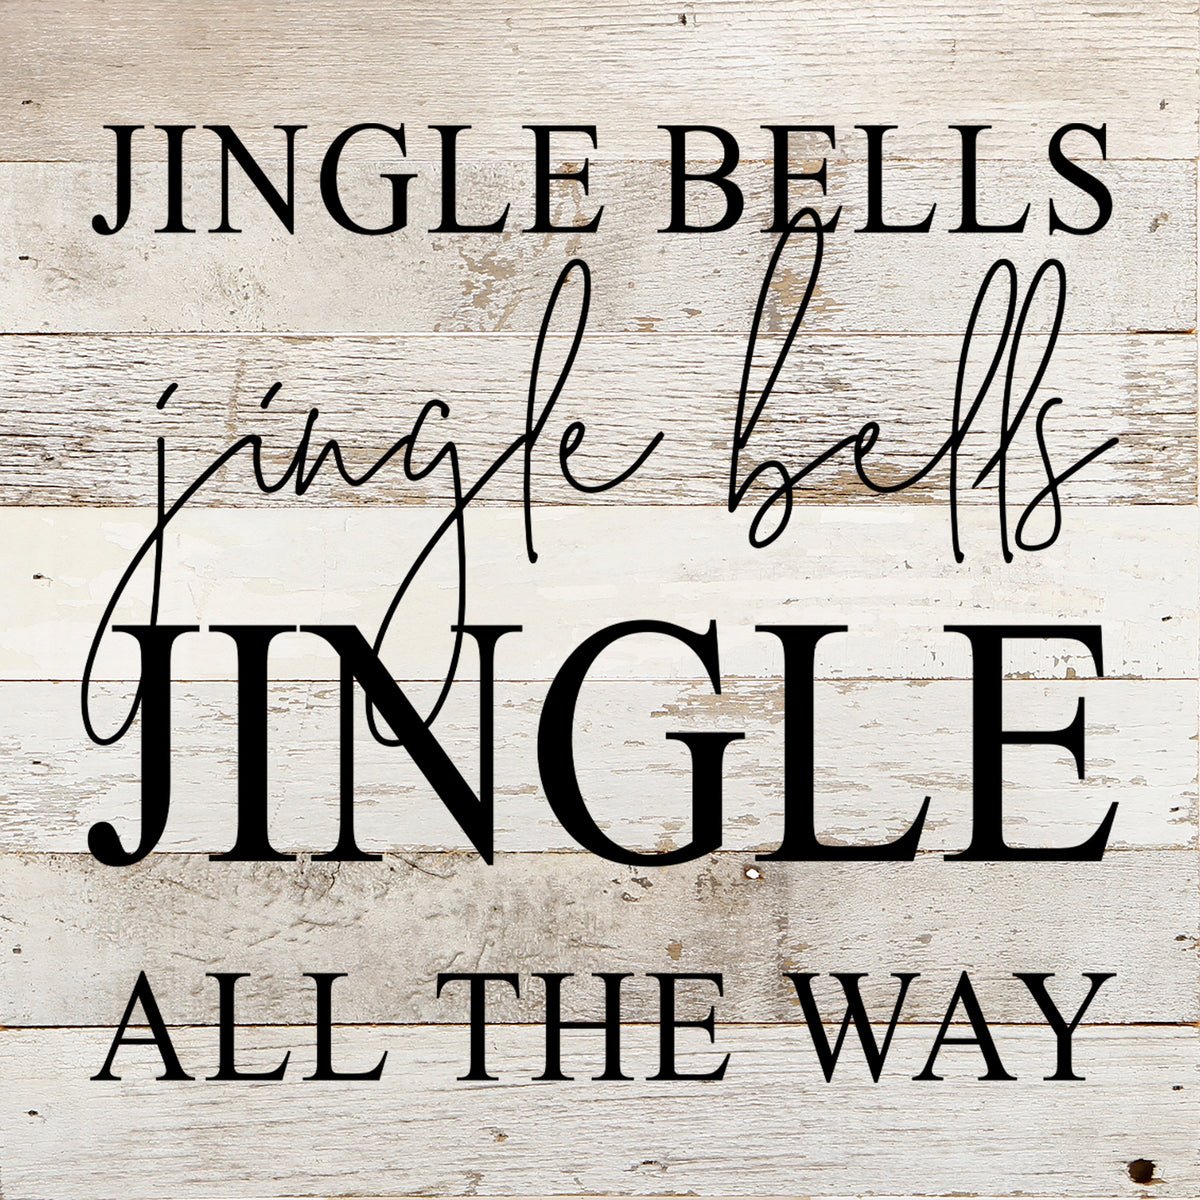 Jingle bells, jingle bells, jingle all the way / 10"x10" Reclaimed Wood Sign